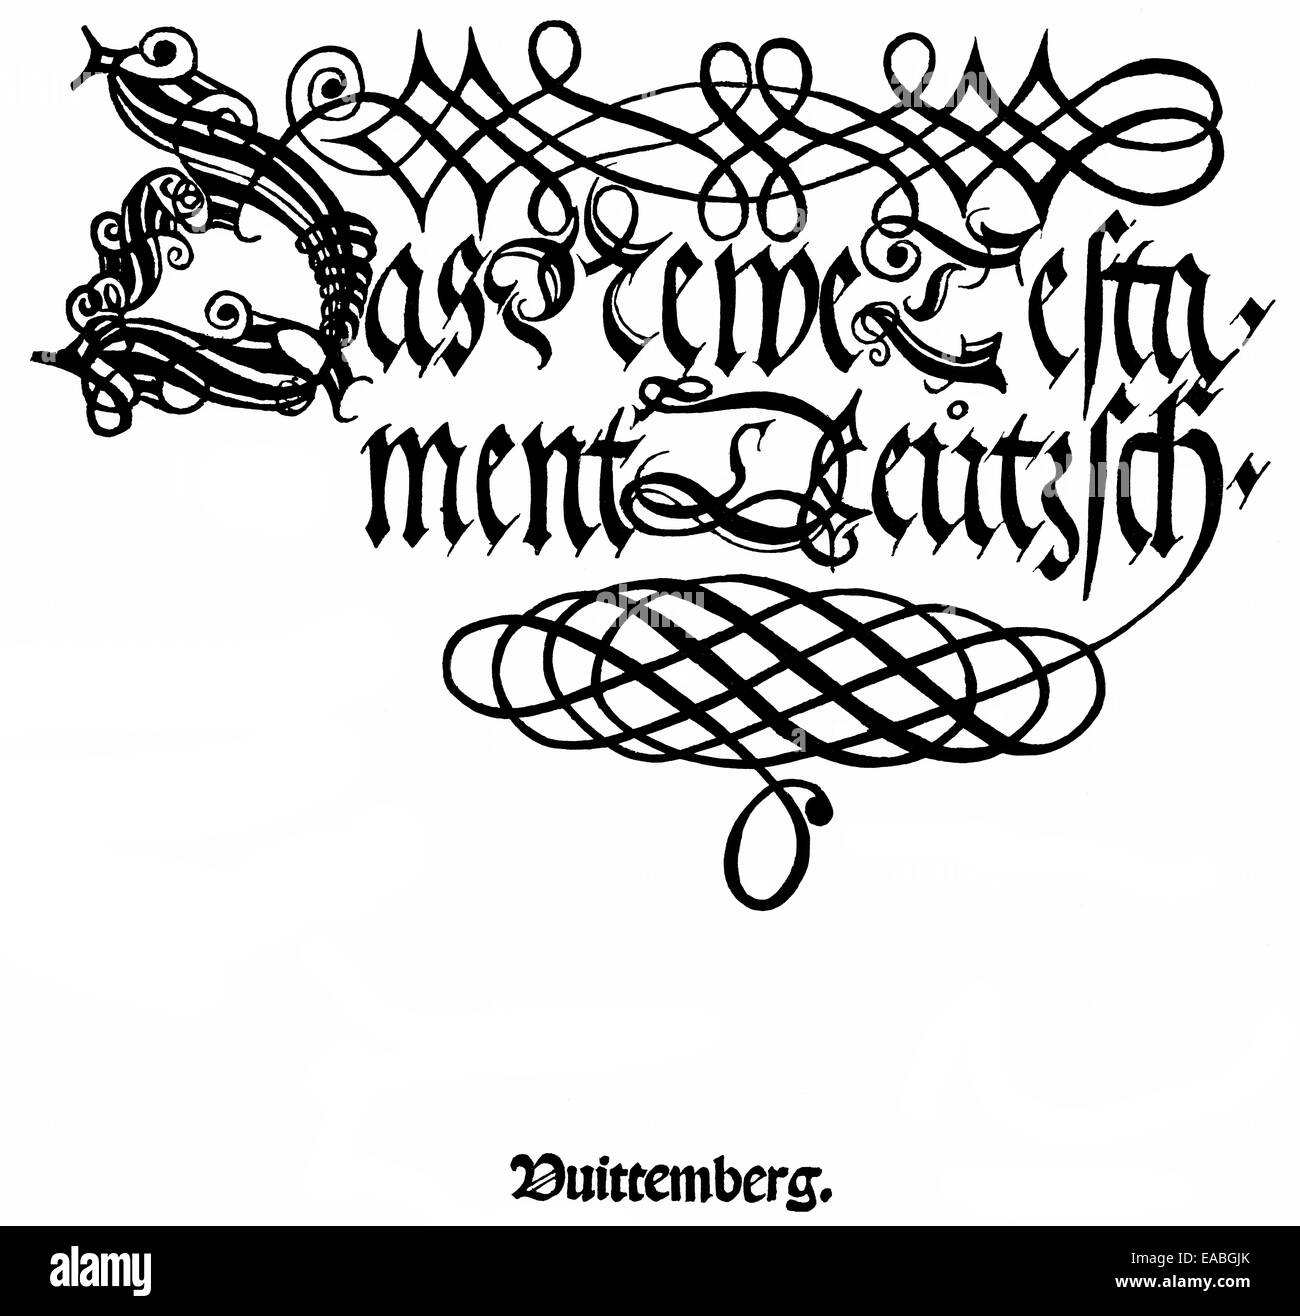 1520, title page of the first reformation document written by Martin Luther, 1483 - 1546, Holzschnitt von 1520, Titelseite der1. Stock Photo